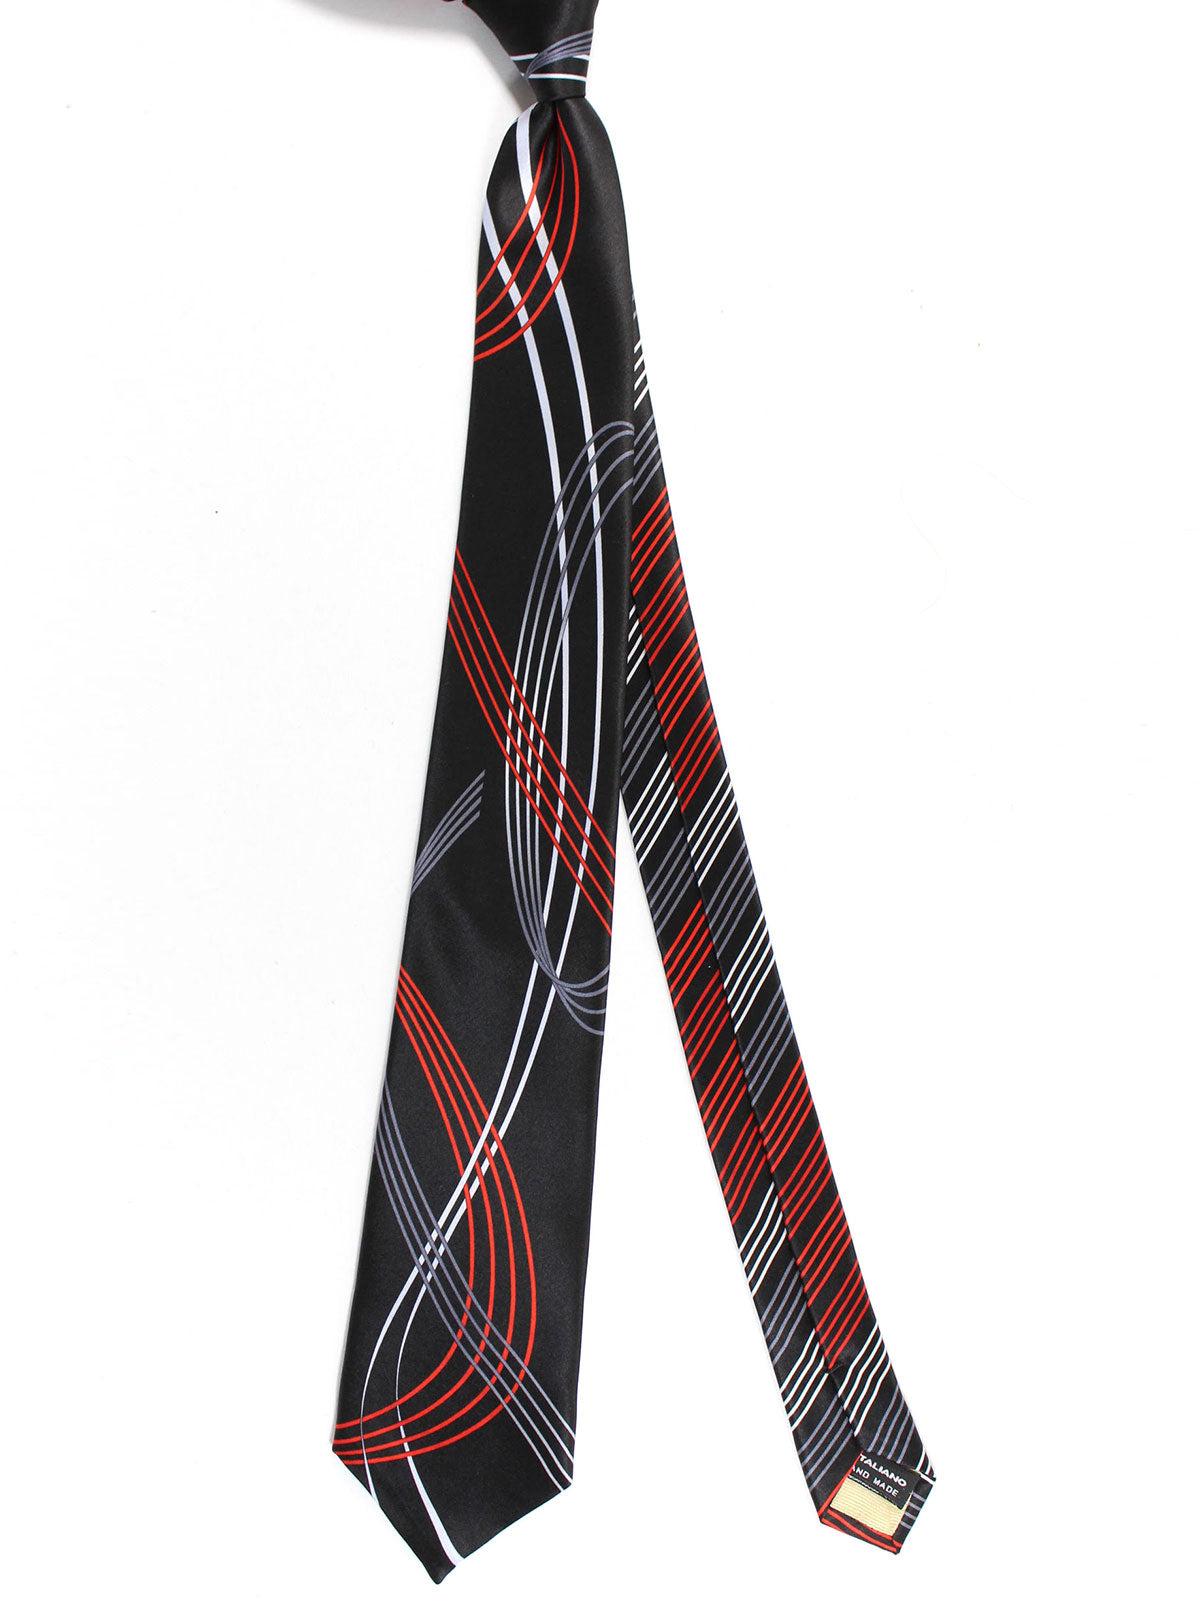 Vitaliano Pancaldi Tie Black Gray Red Swirl Design